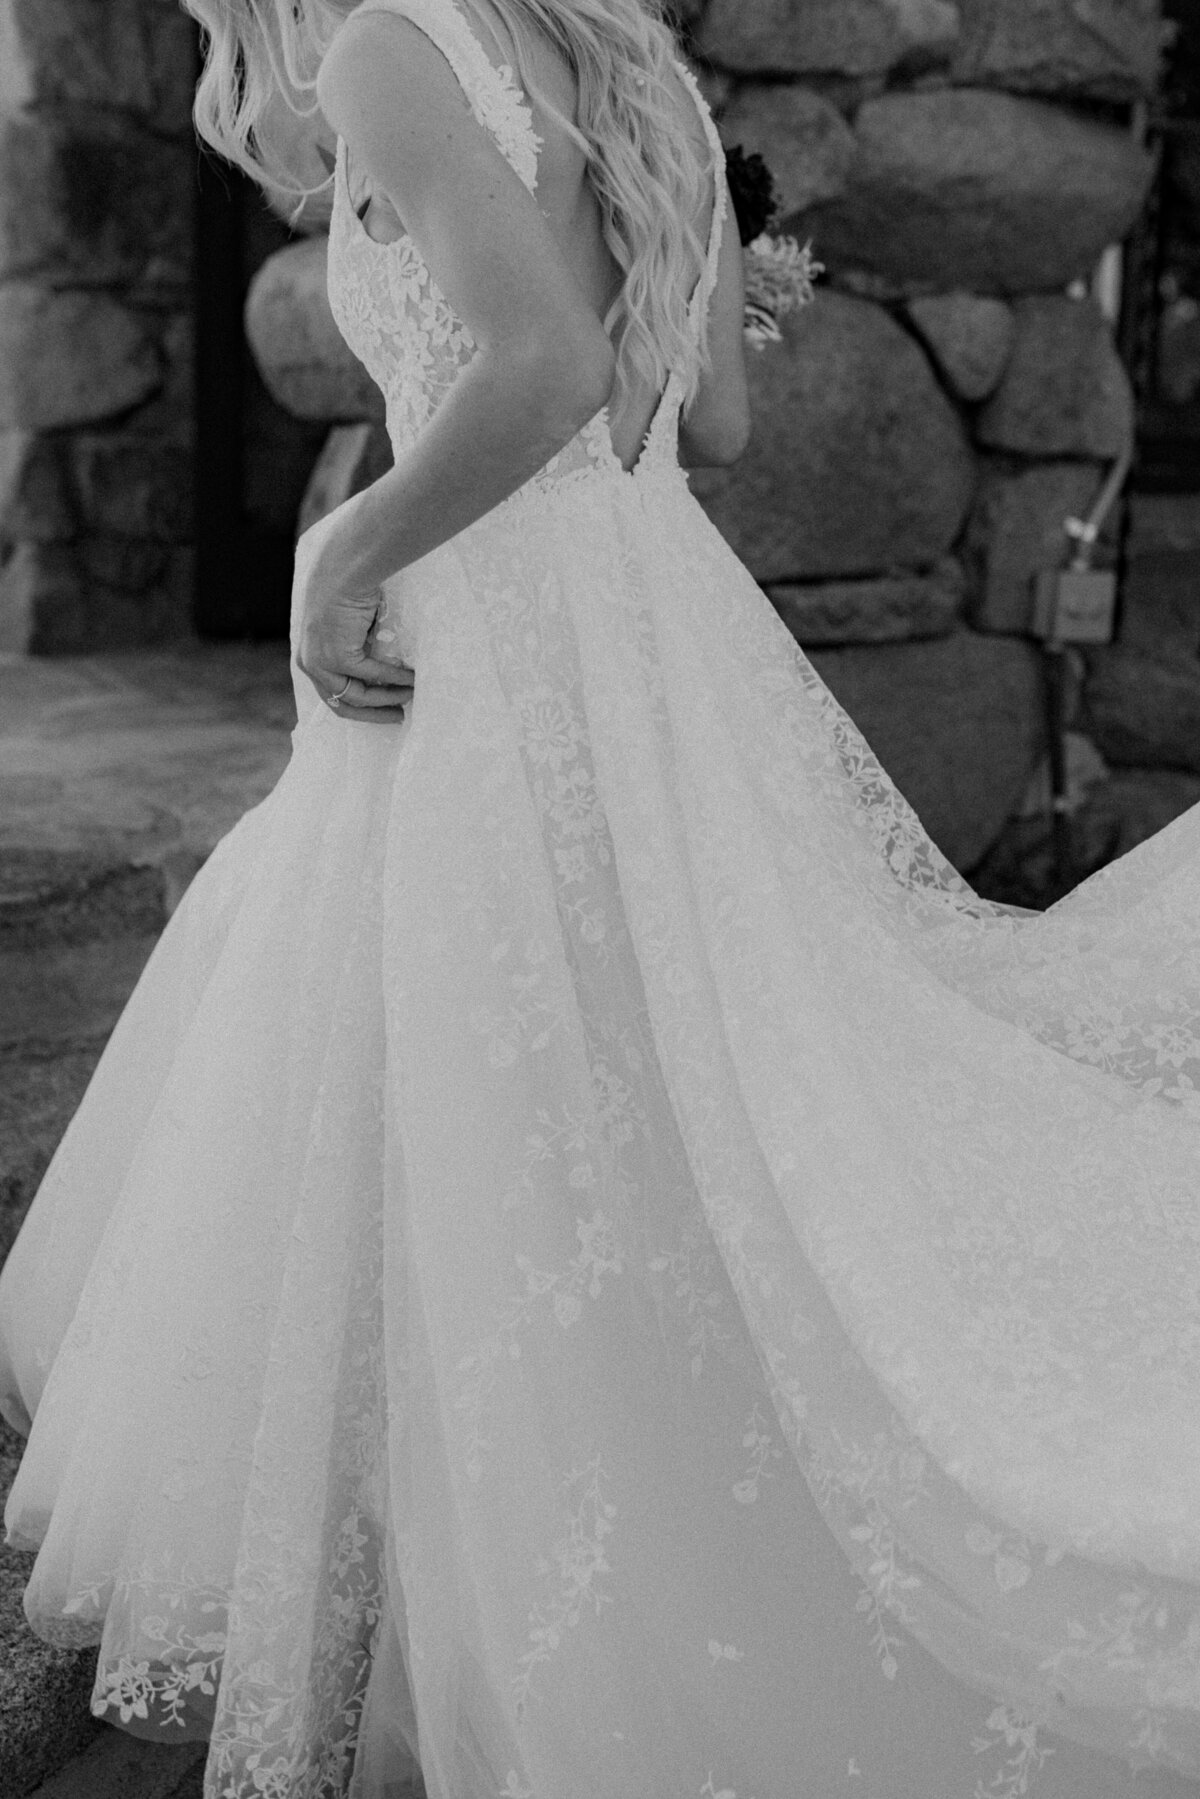 Black and white Bride Portrait Temecula, California Wedding photographer Yescphotography